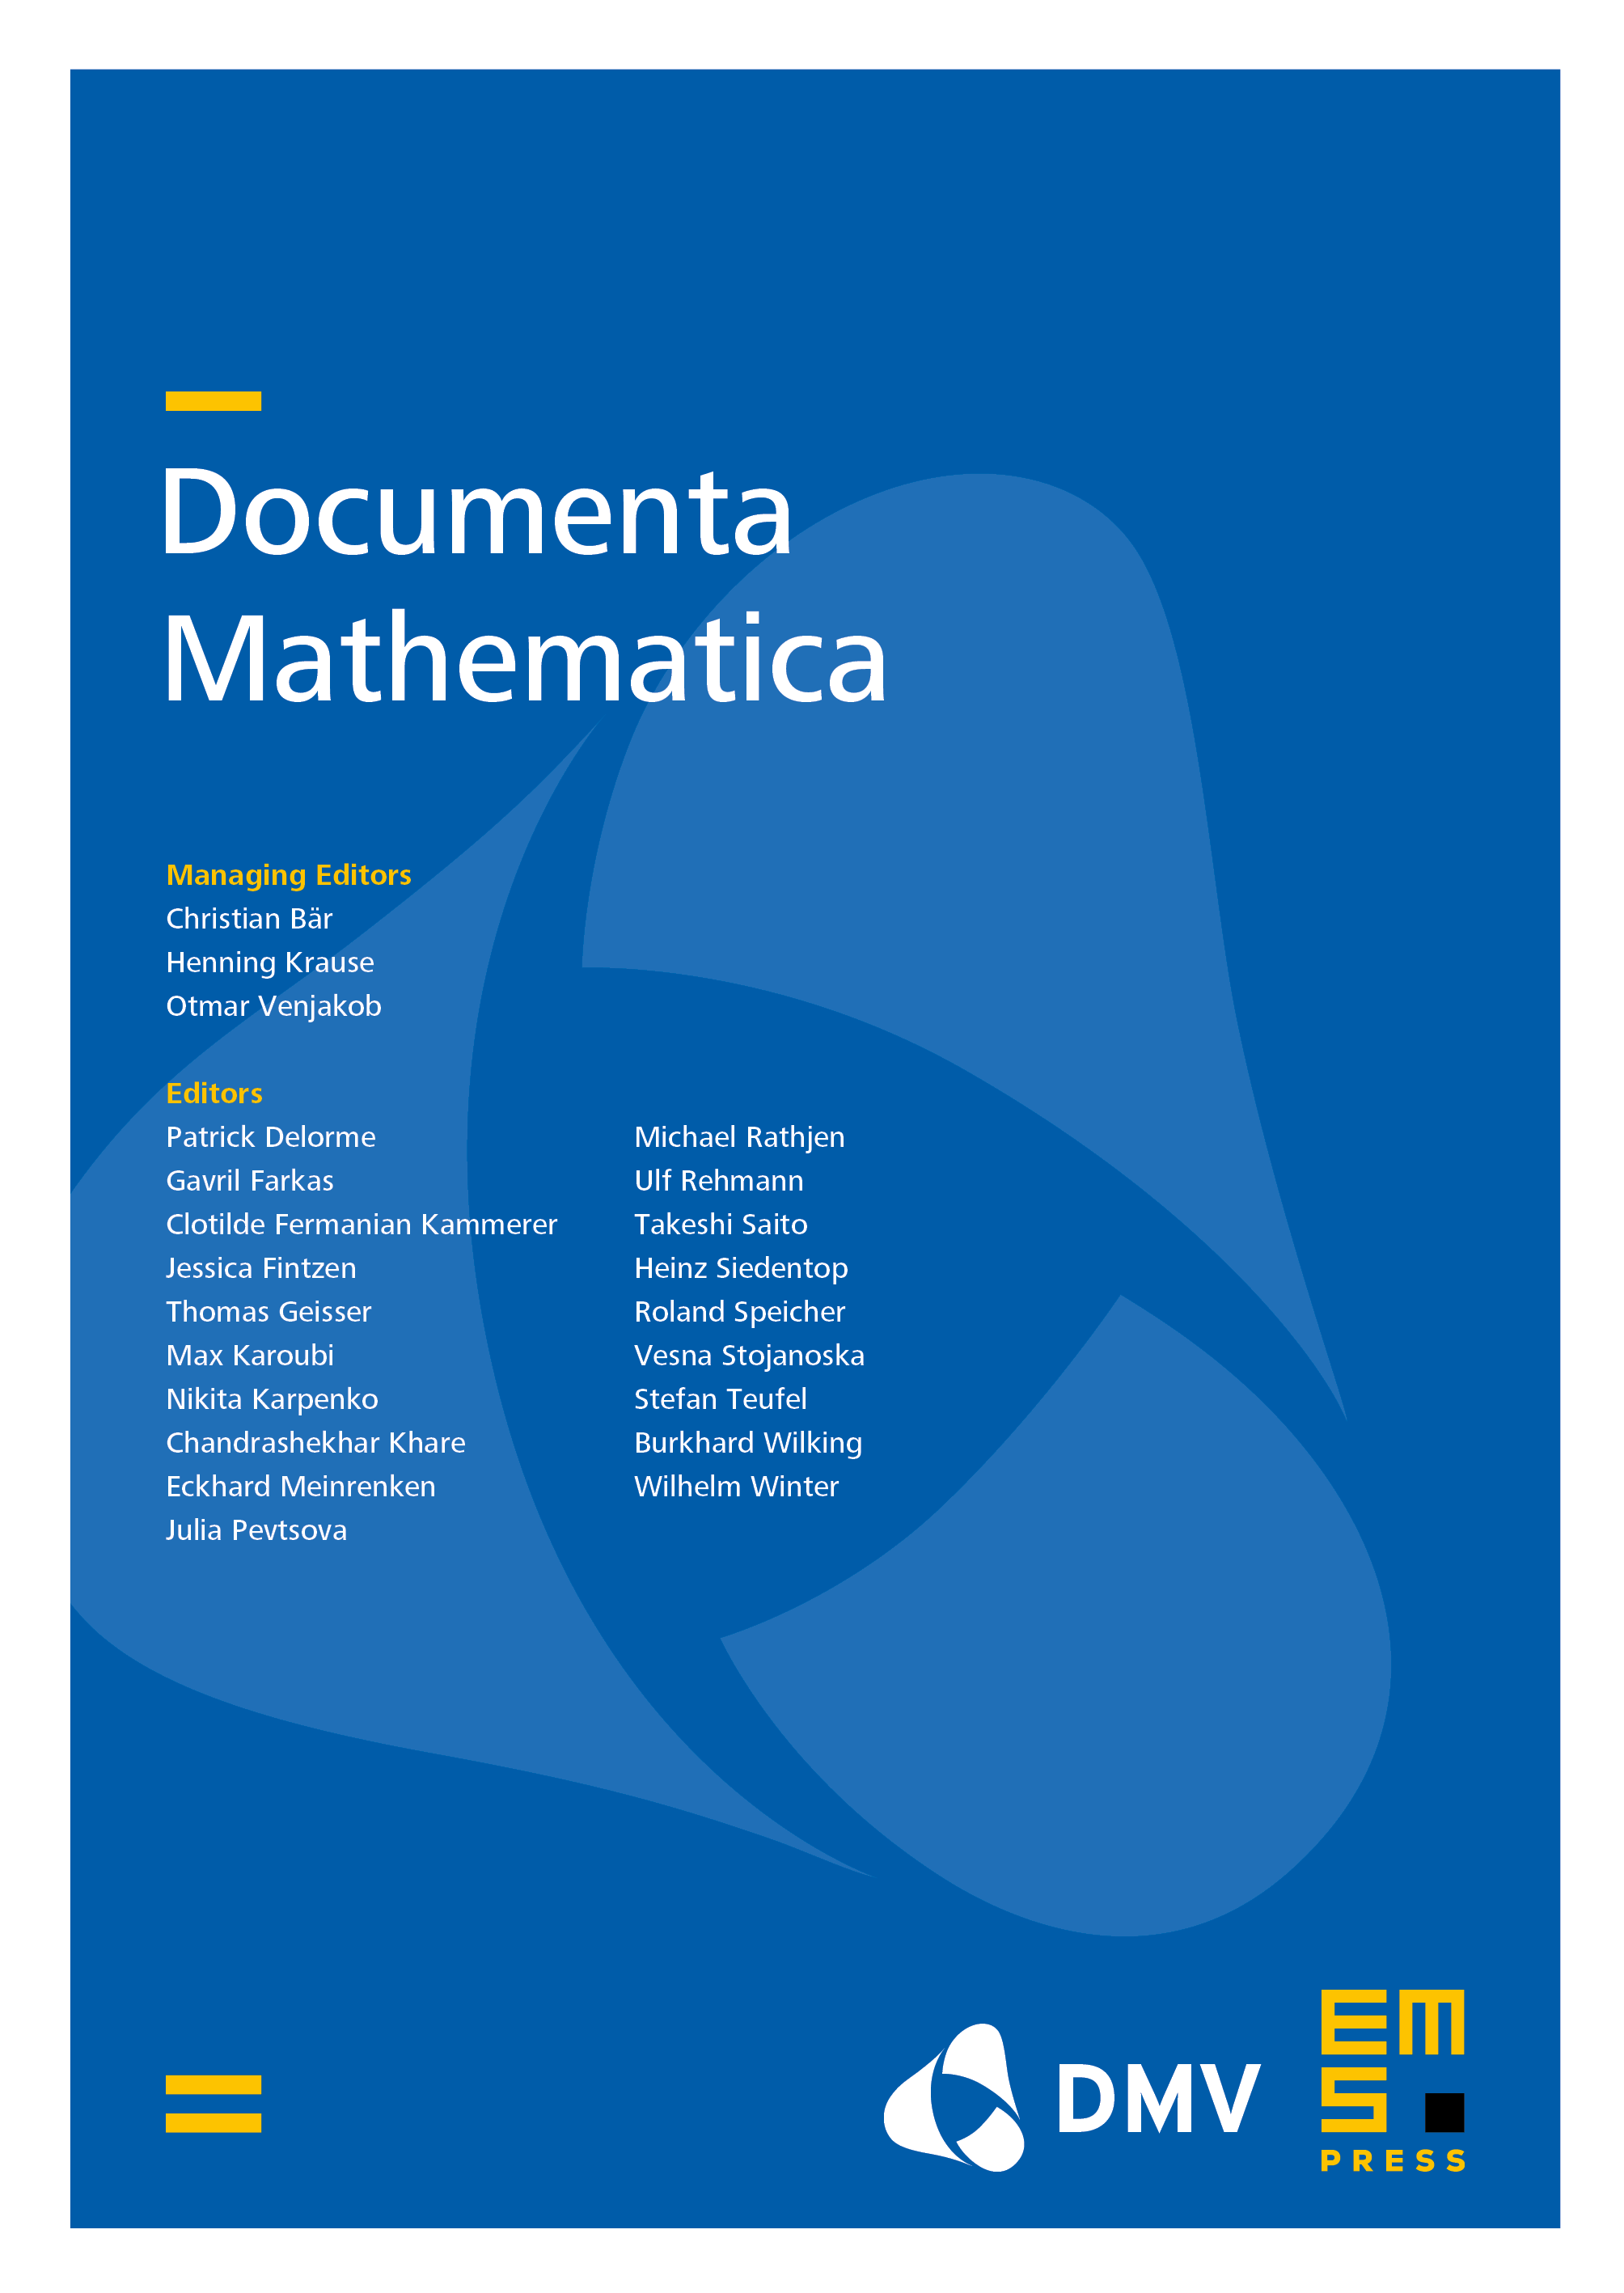 Doc. Math. cover